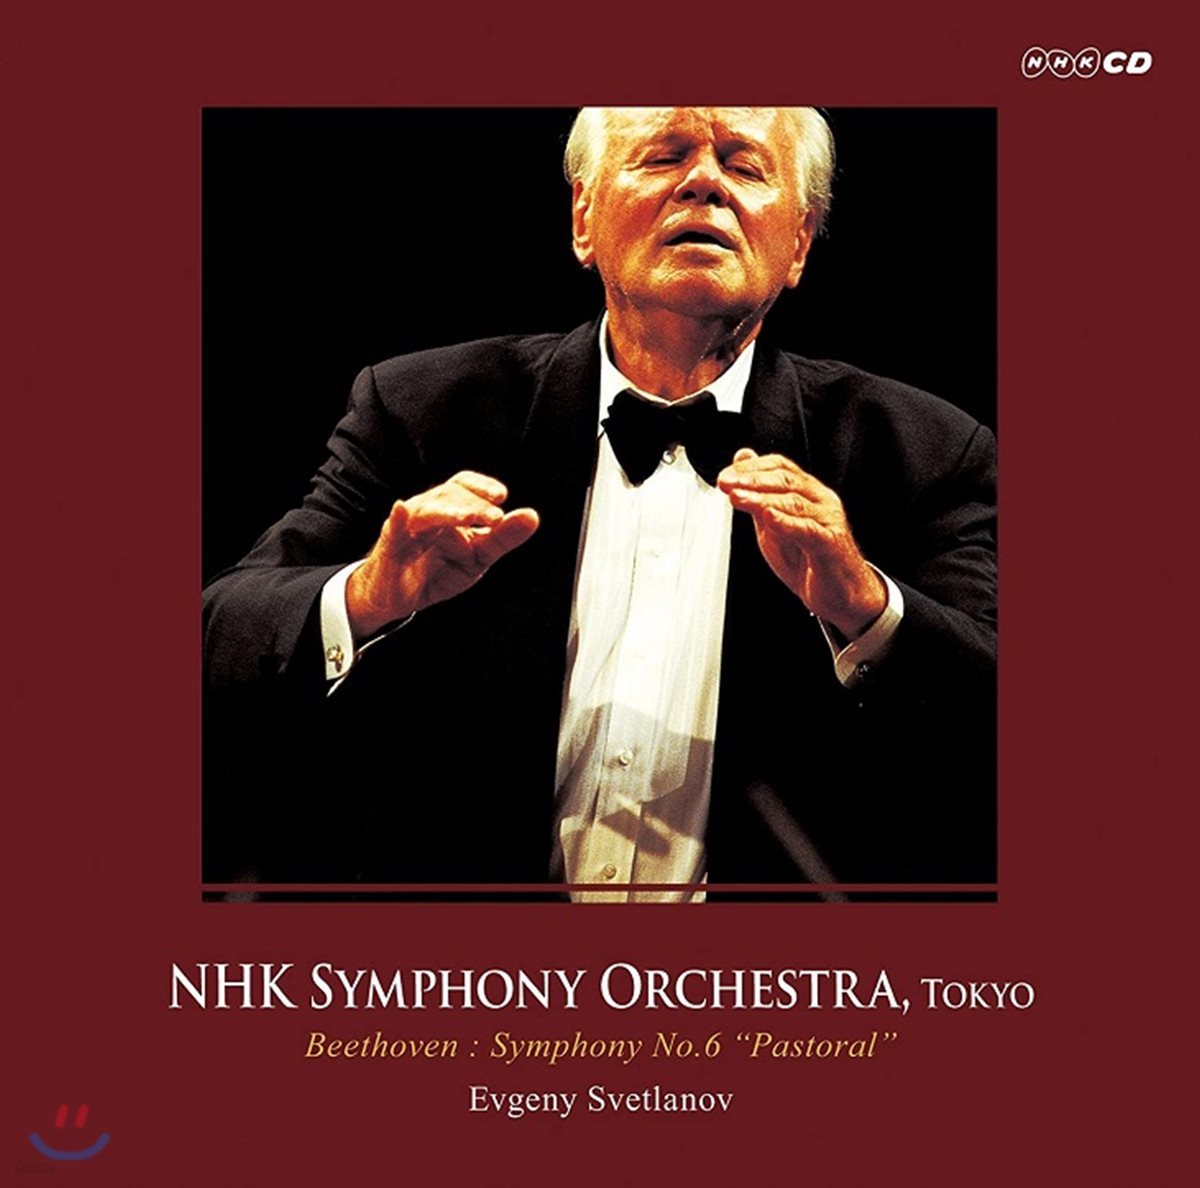 Evgeny Svetlanov 베토벤: 교향곡 6번 '전원' (Beethoven: Symphony No. 6 'Pastorale') 예프게니 스베틀라노프, NHK 심포니 오케스트라